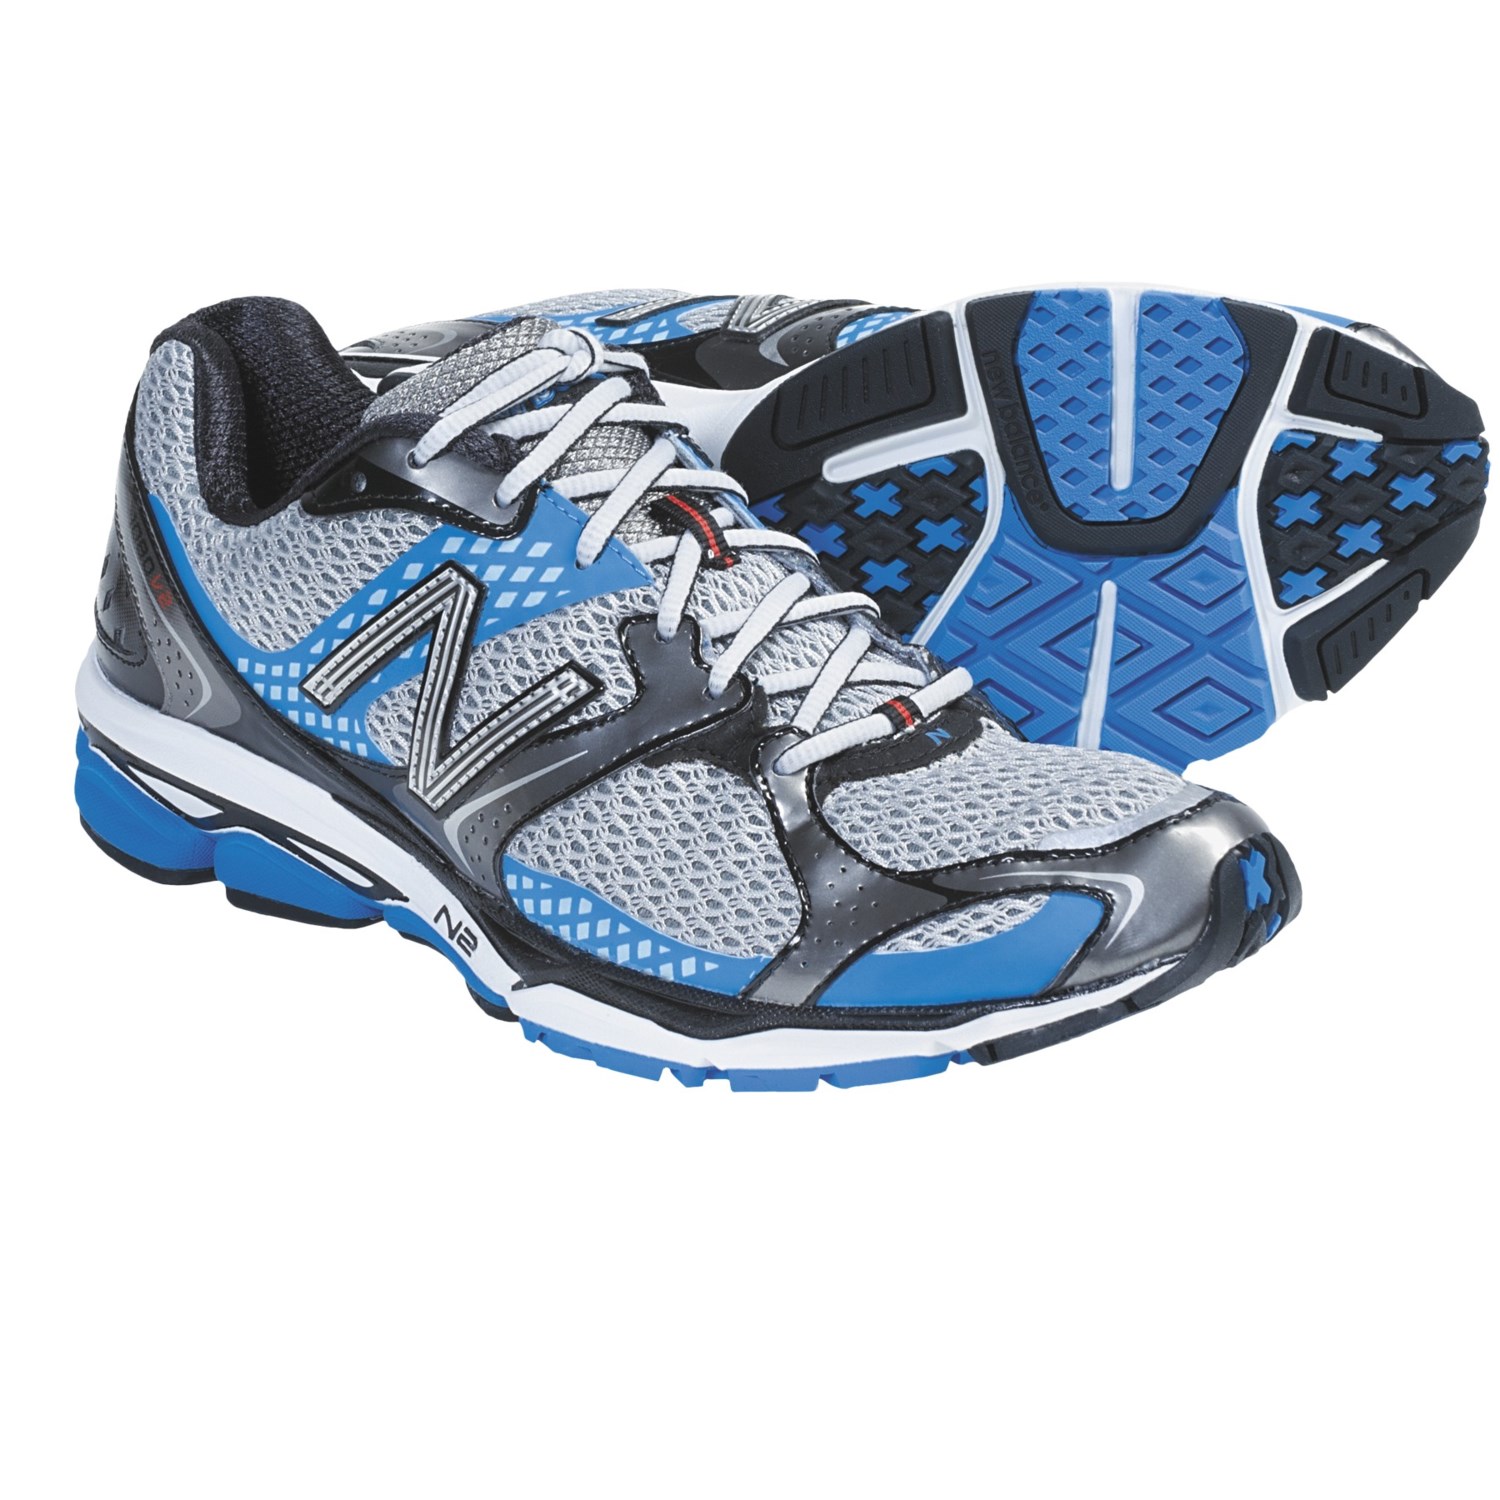 New Balance M1080v2 Running Shoes (For Men) - Save 29%